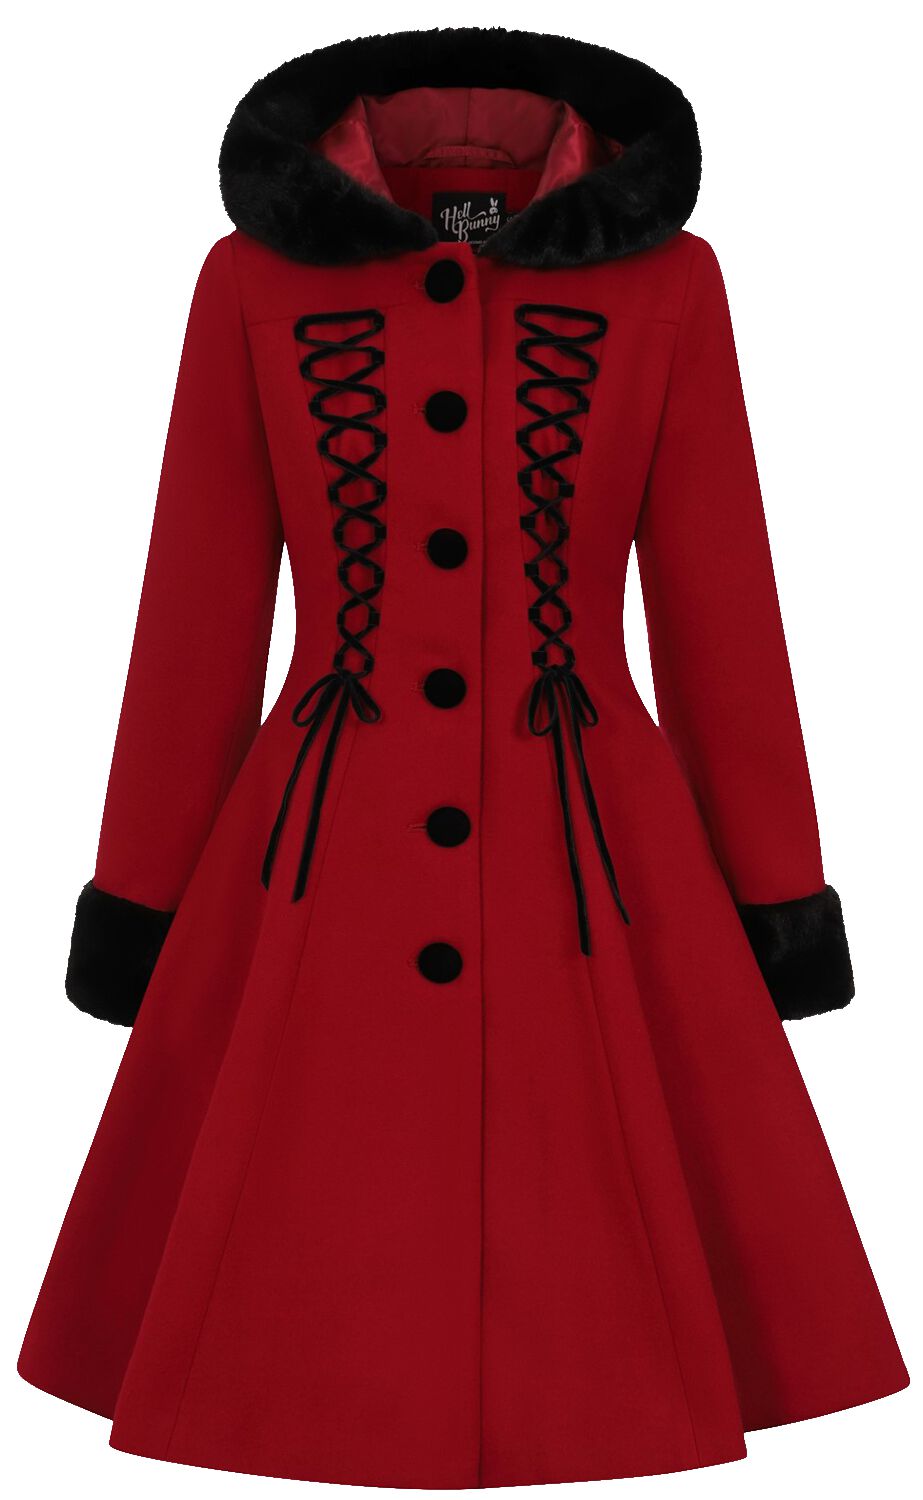 Hell Bunny Amaya Coat Mantel rot schwarz in M